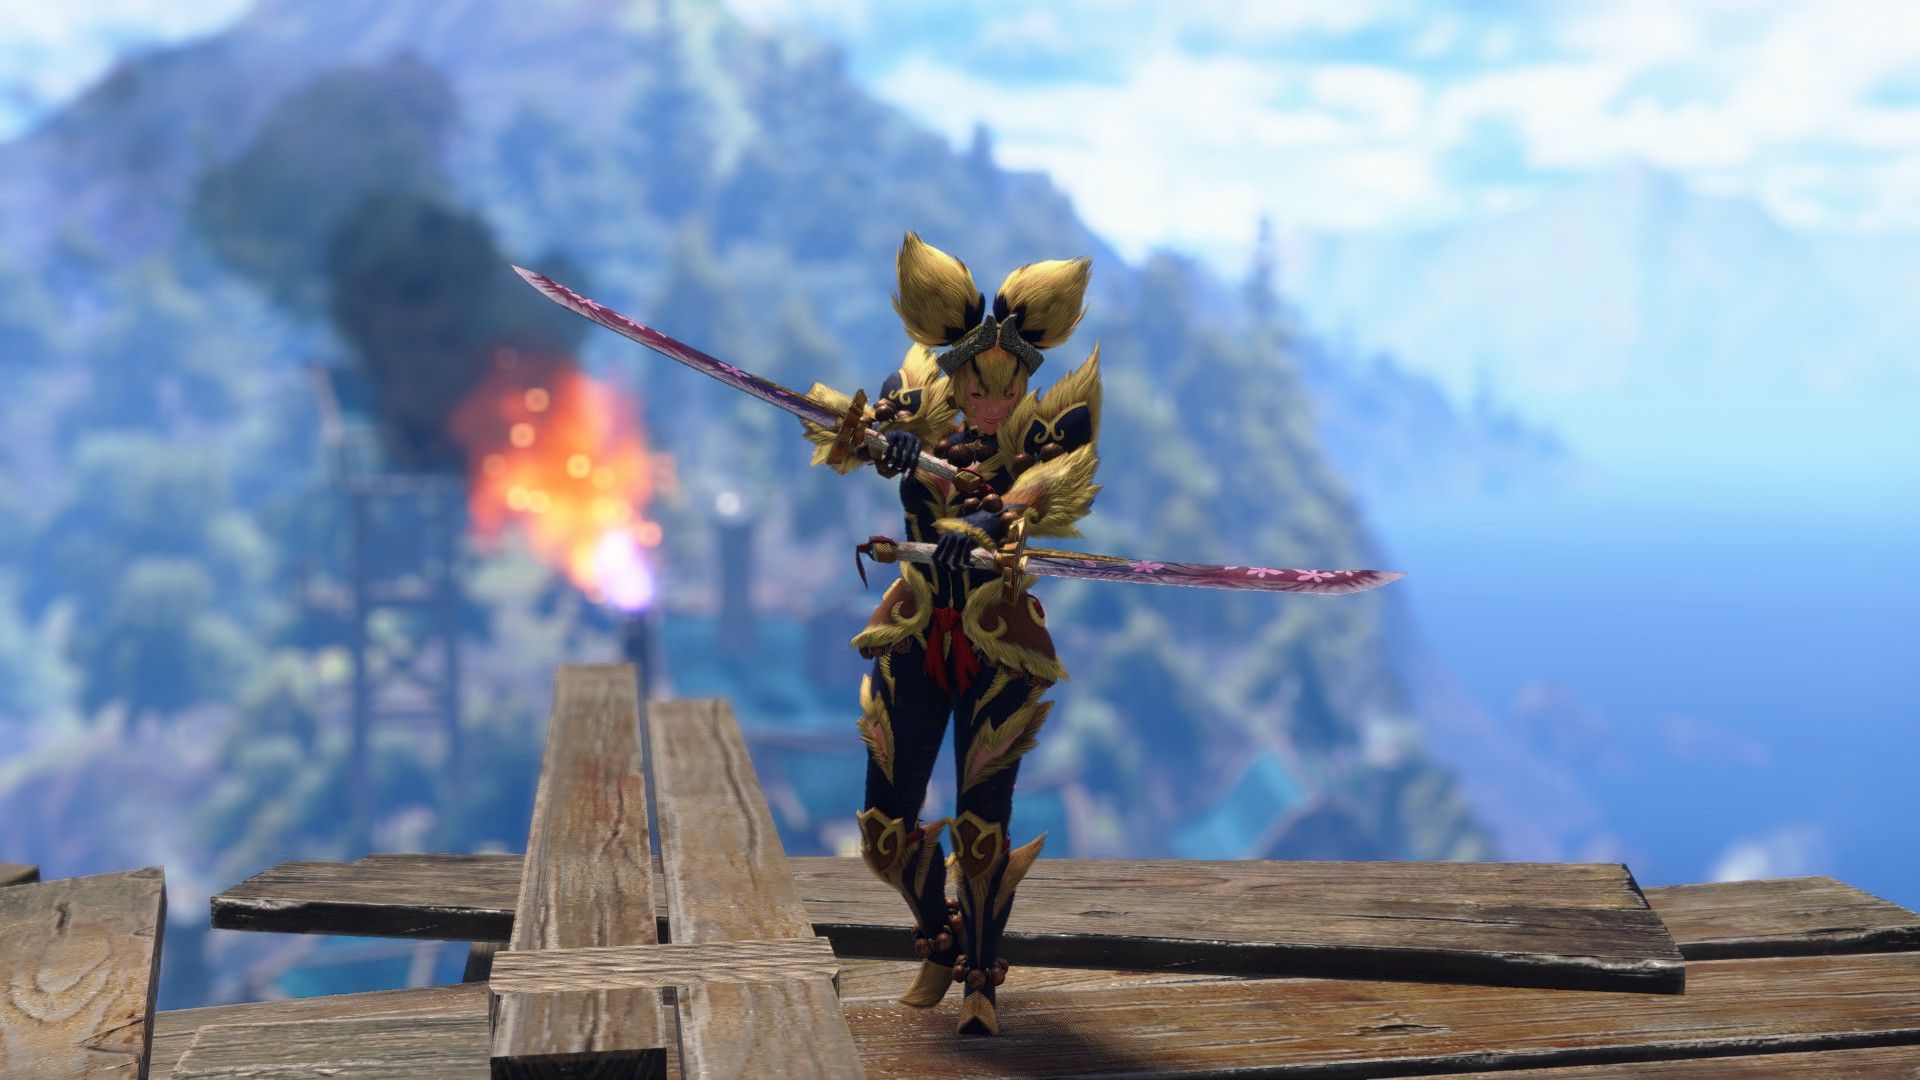 Female player character wearing the Furious Rajang armor wielding Mizutsune Dual Blades